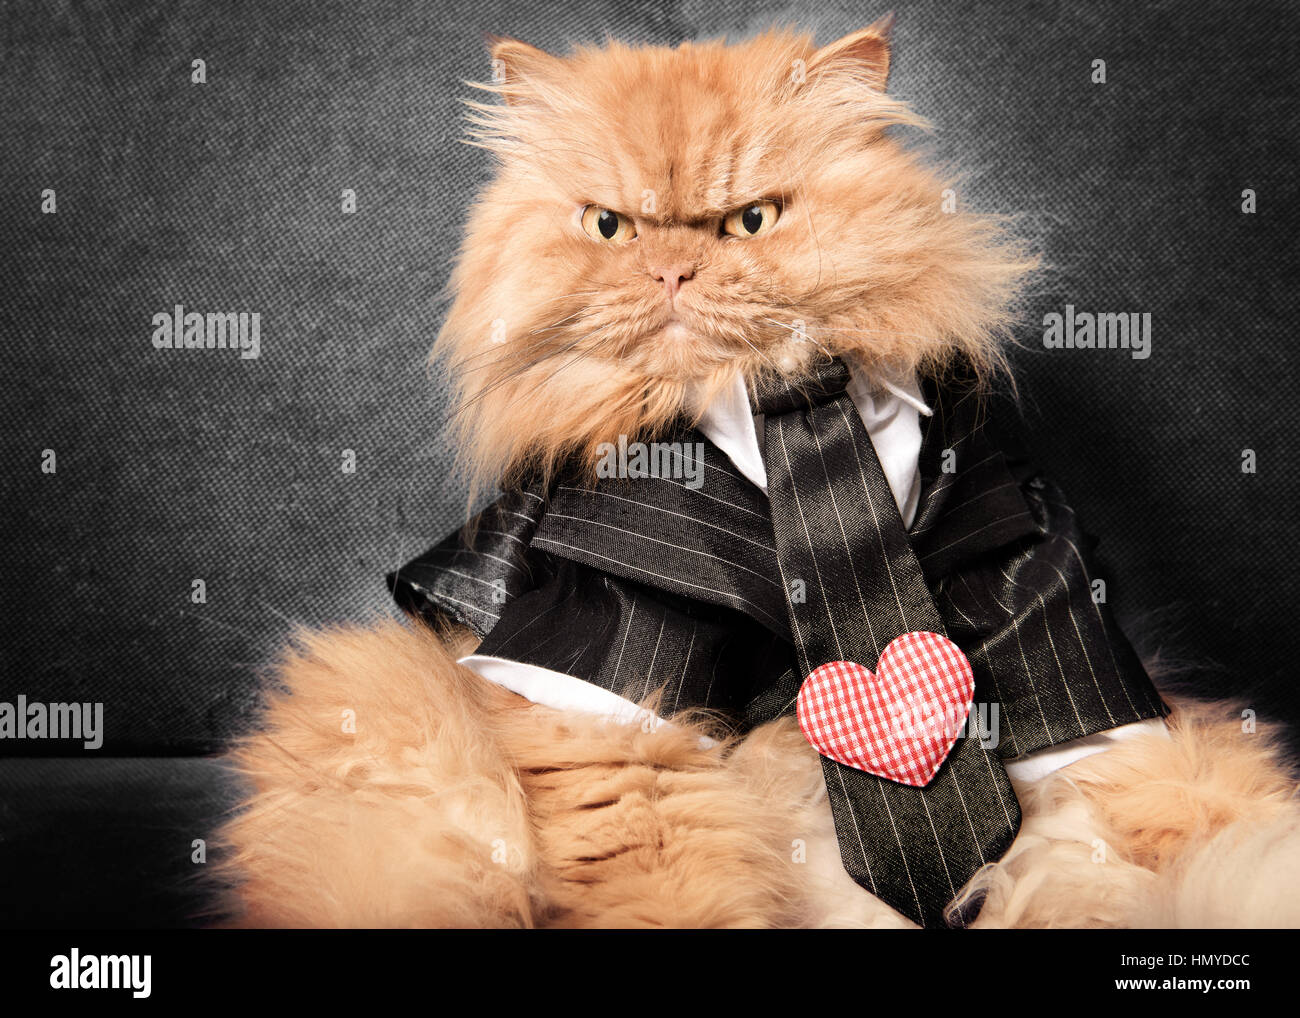 Gatos malvados graciosos fotografías e imágenes de alta resolución - Alamy